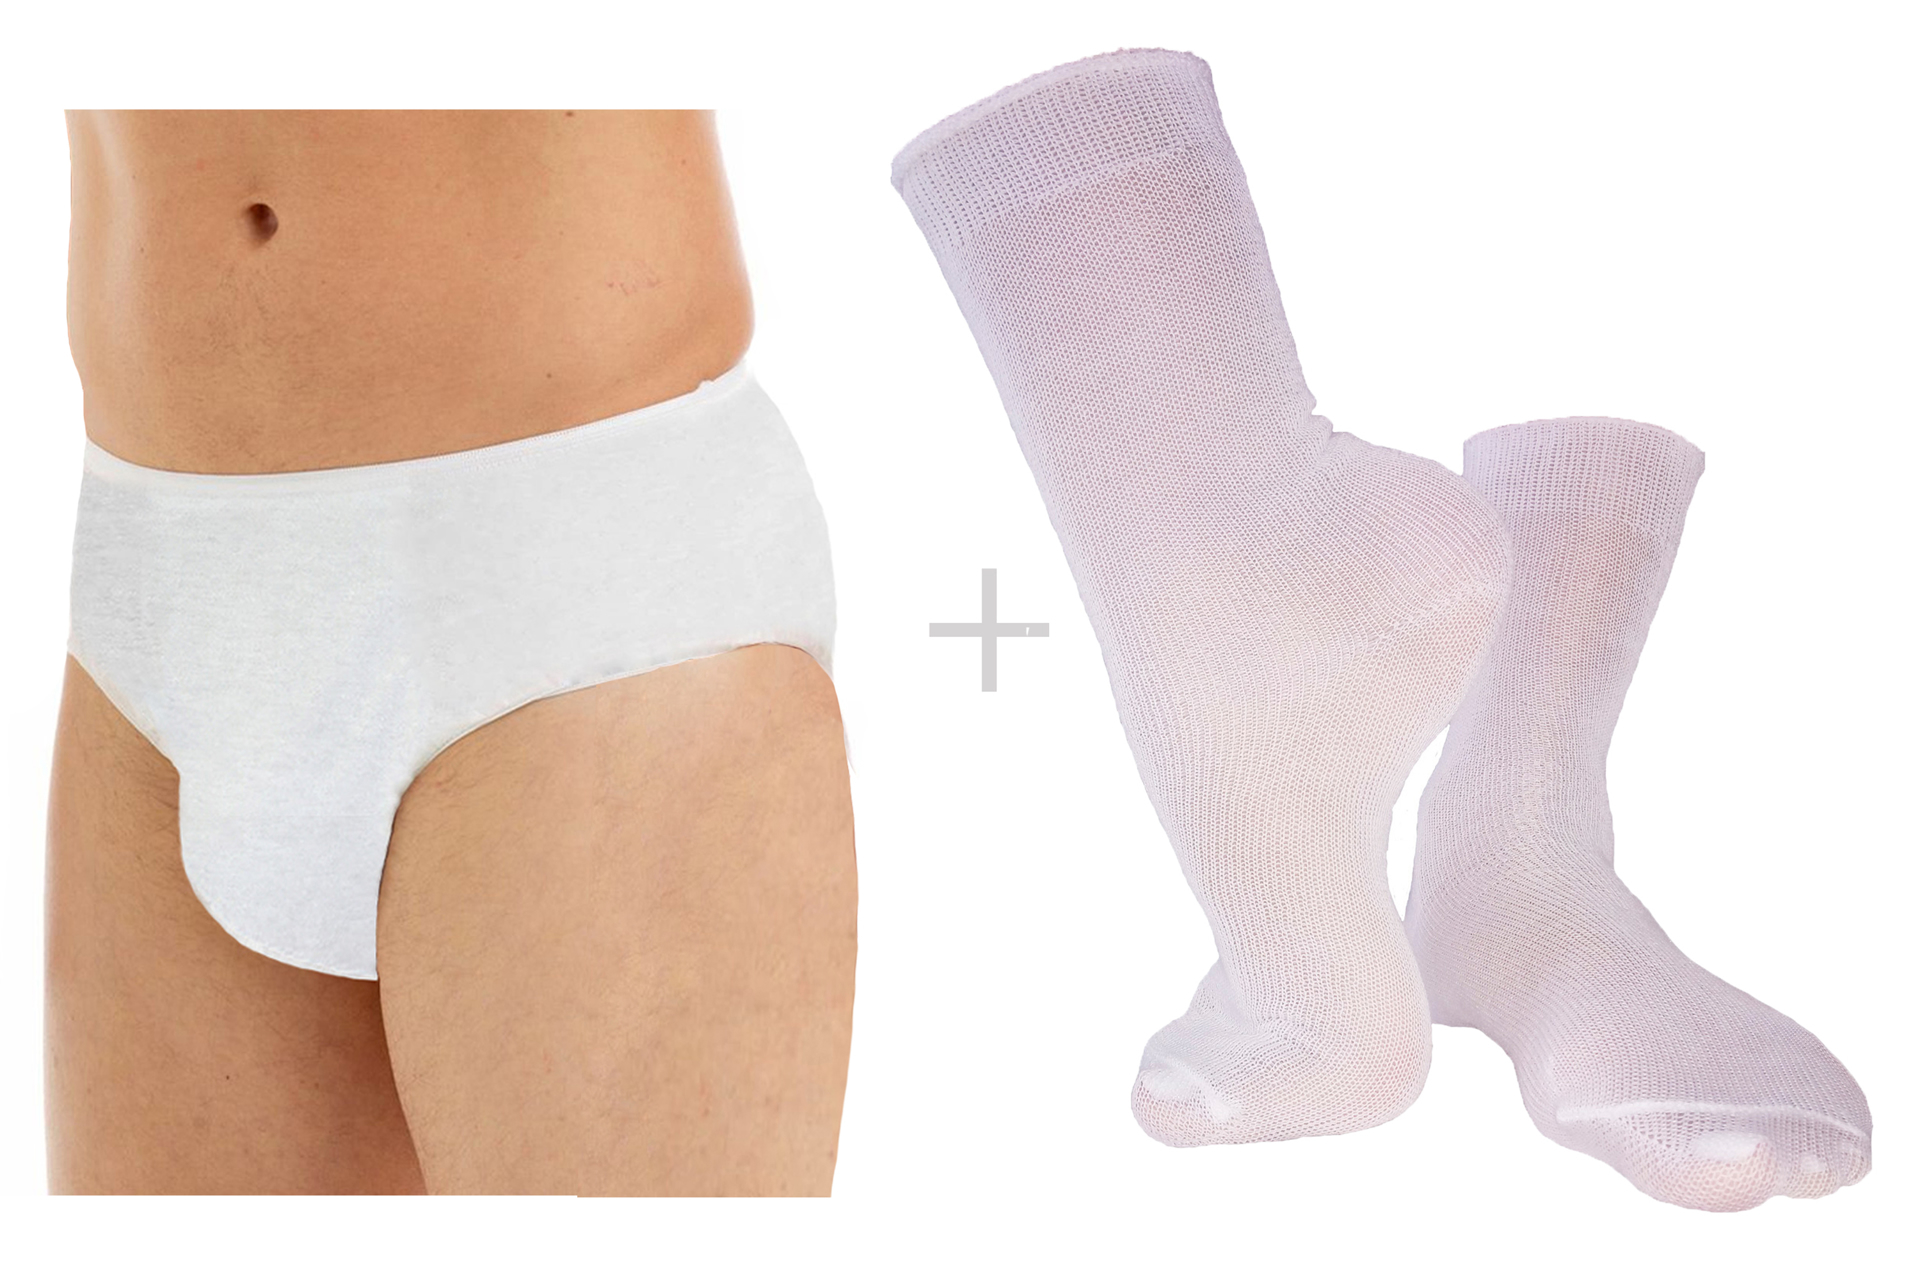 Underworks Underworks Combo - Men's Briefs and Crew Socks -10-Pack of Men's  Disposable 100% Cotton Underwear and 10-Pack of Disposable Crew Socks 